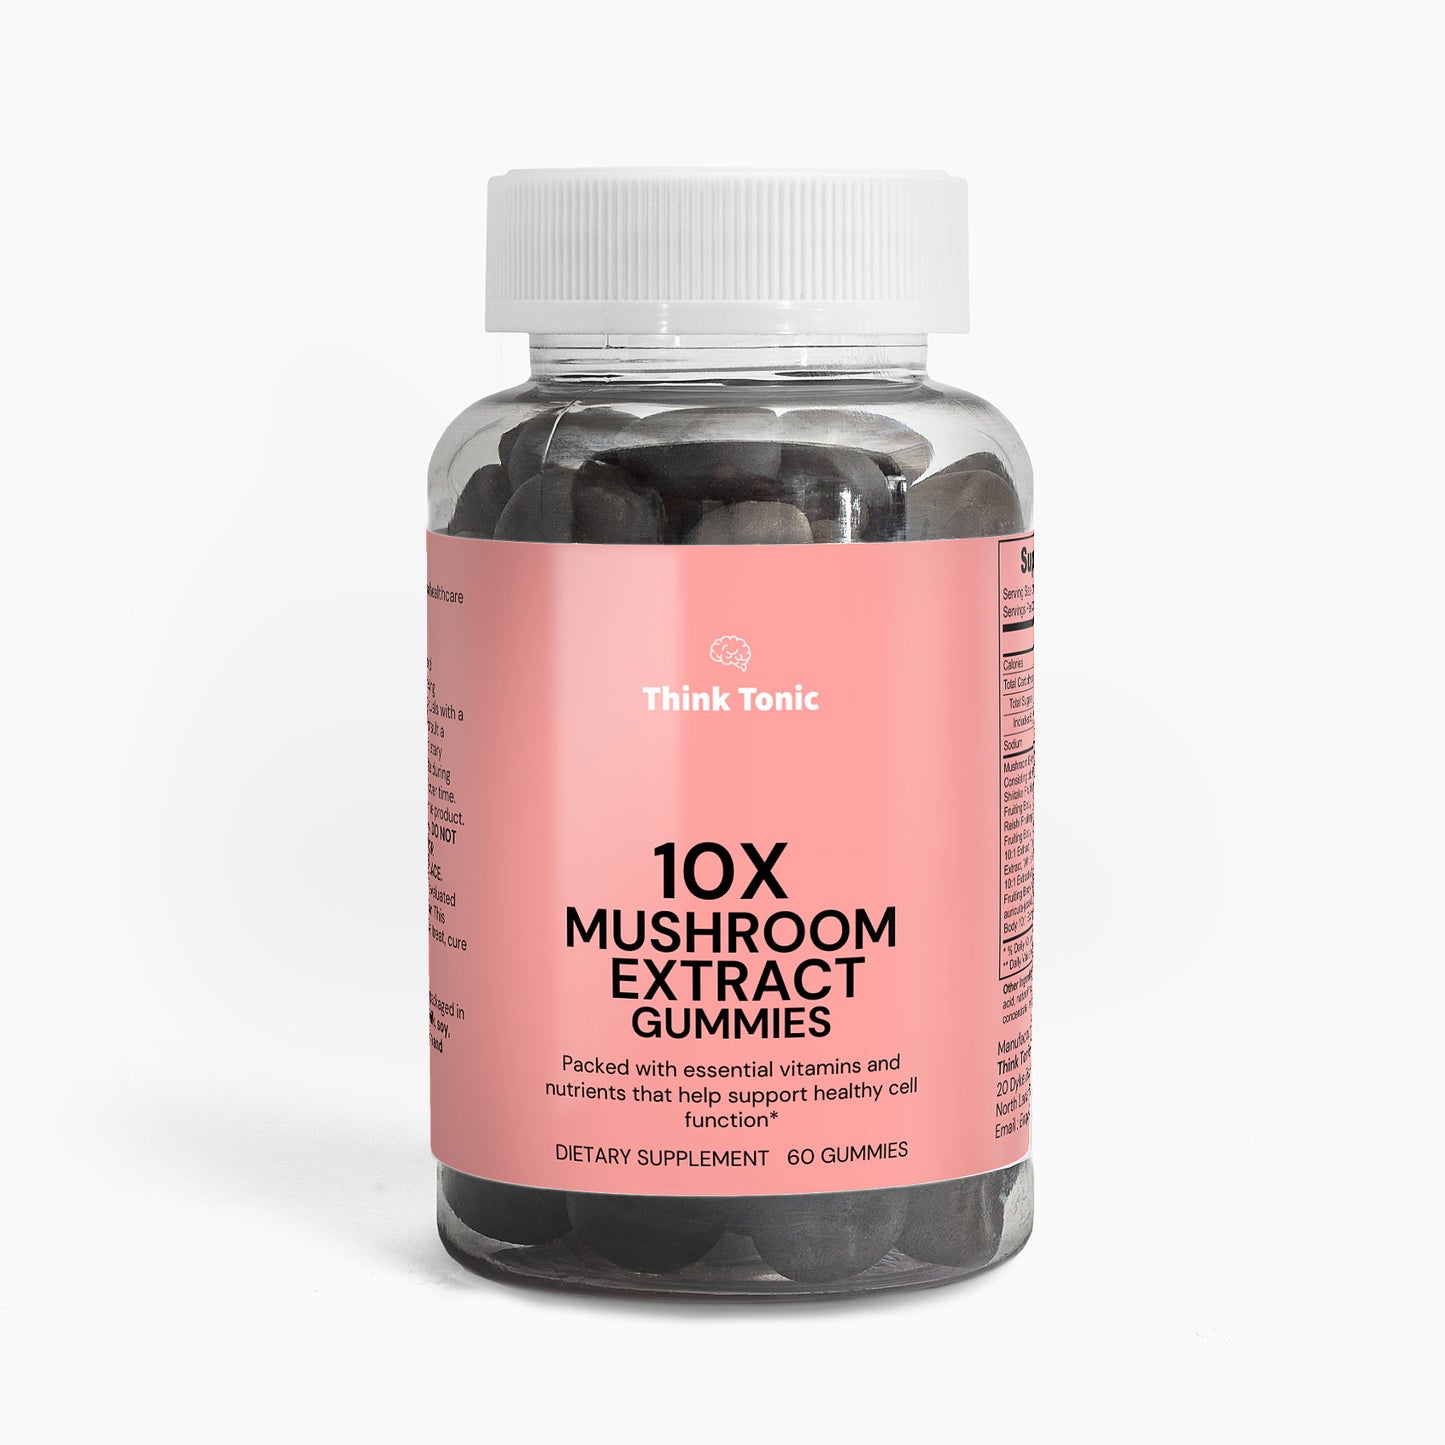 10X Mushroom Extract Gummies